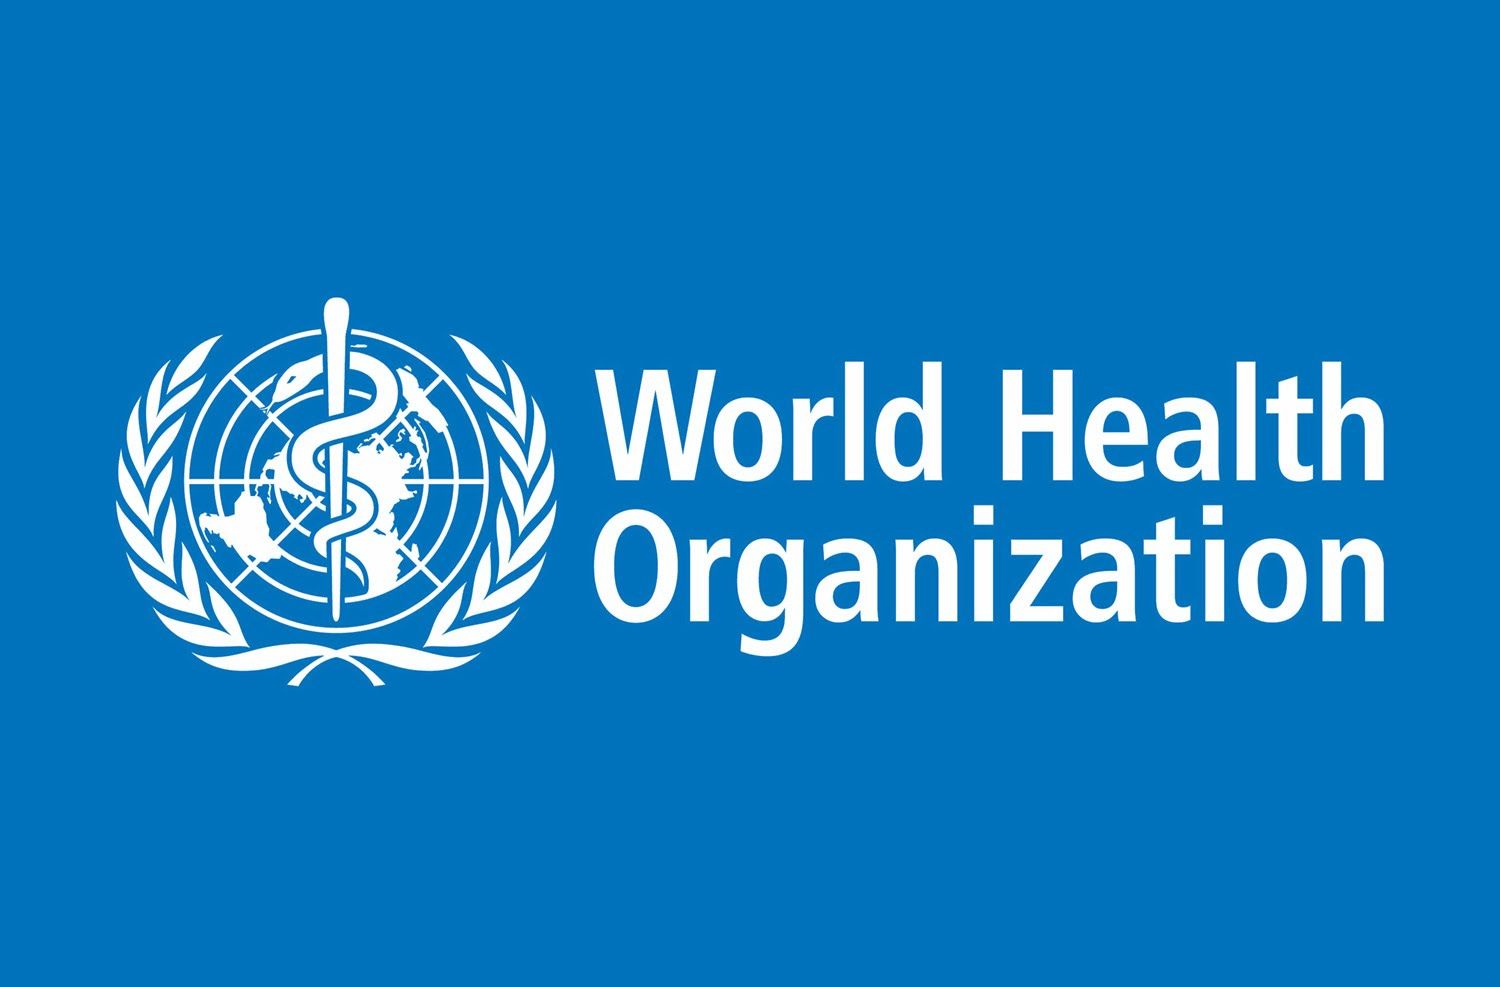 The World Health Organization Logo